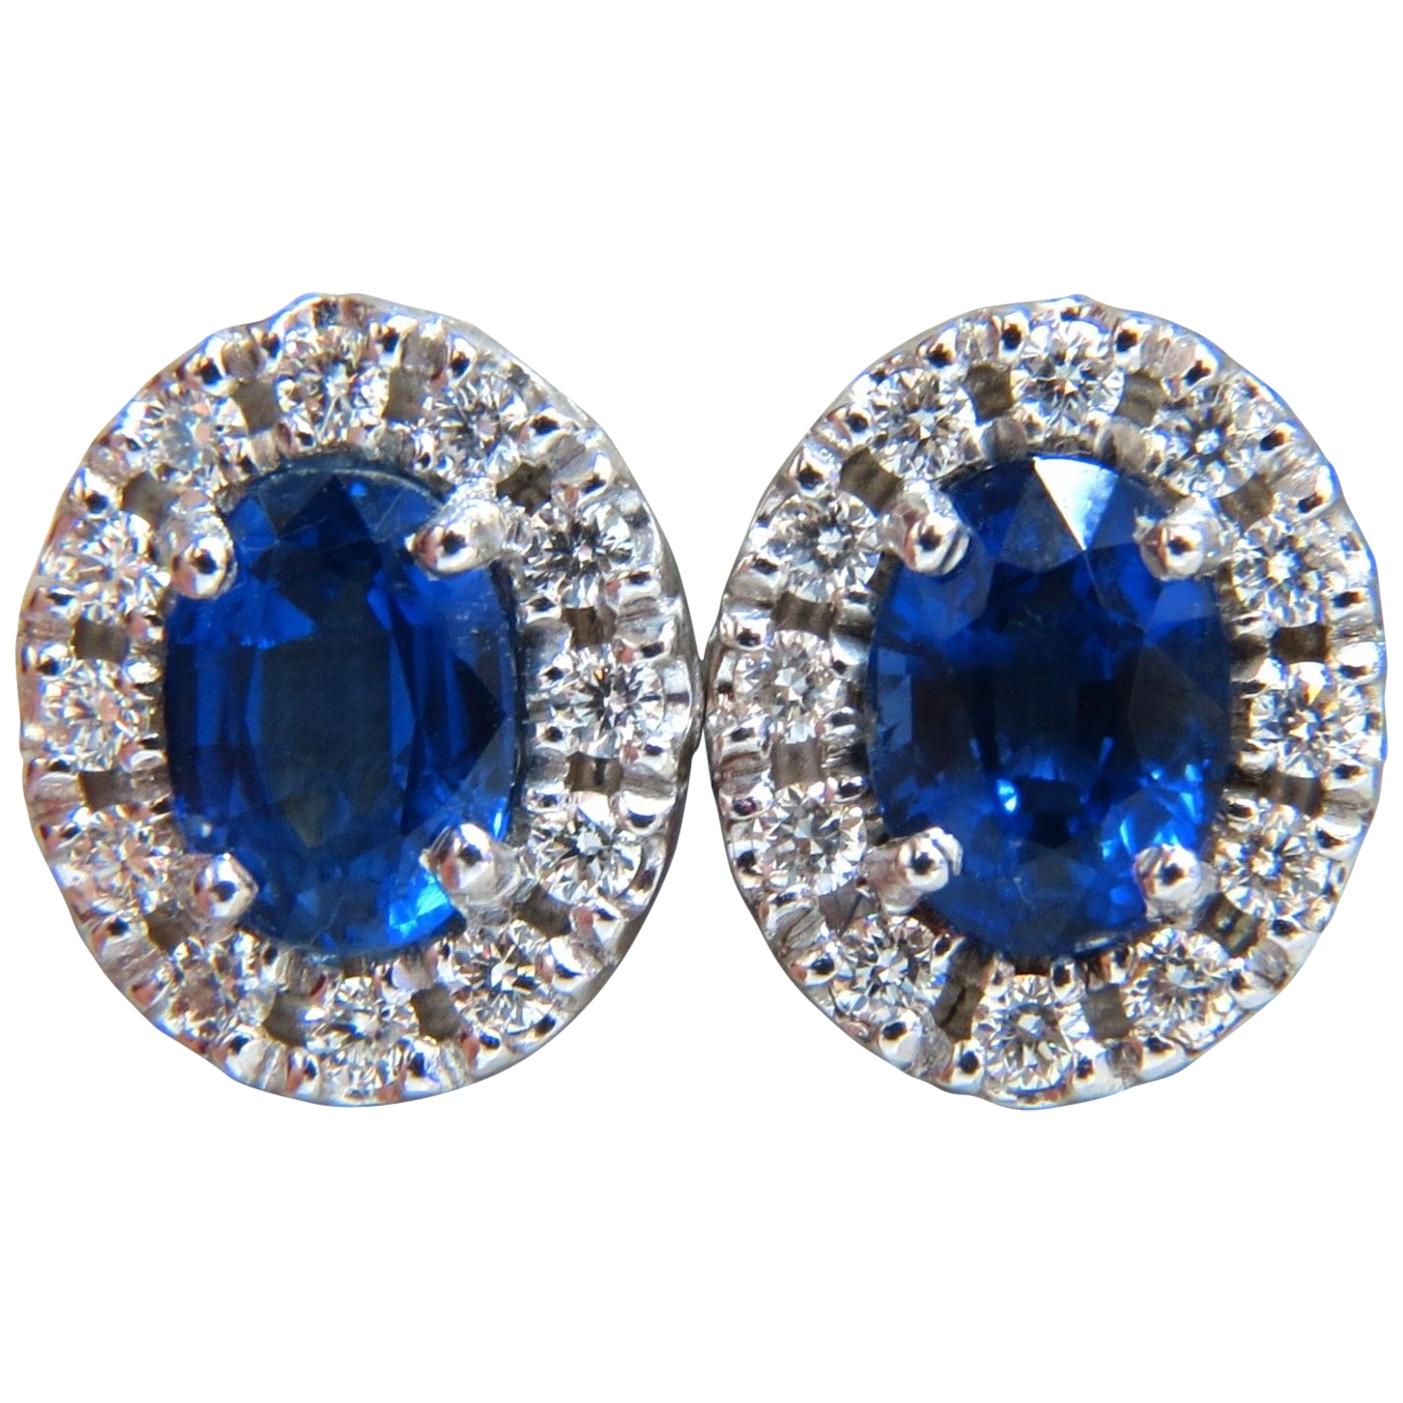 2.40 Carat Natural Sapphire Diamond Cluster Earrings 18 Karat Platinum